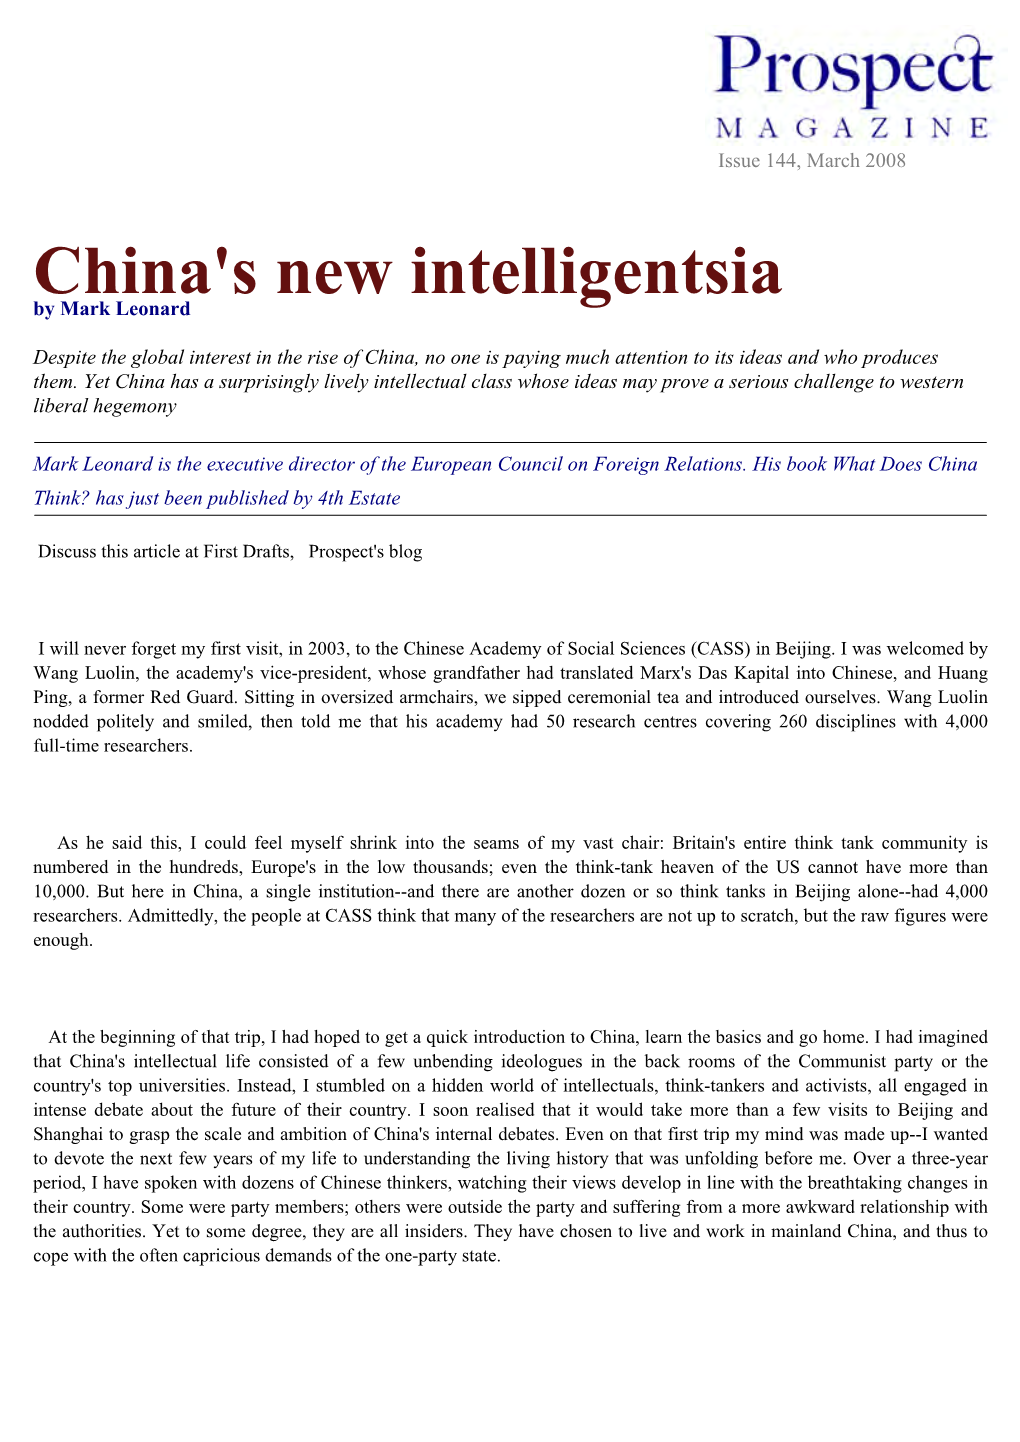 China's New Intelligentsia by Mark Leonard